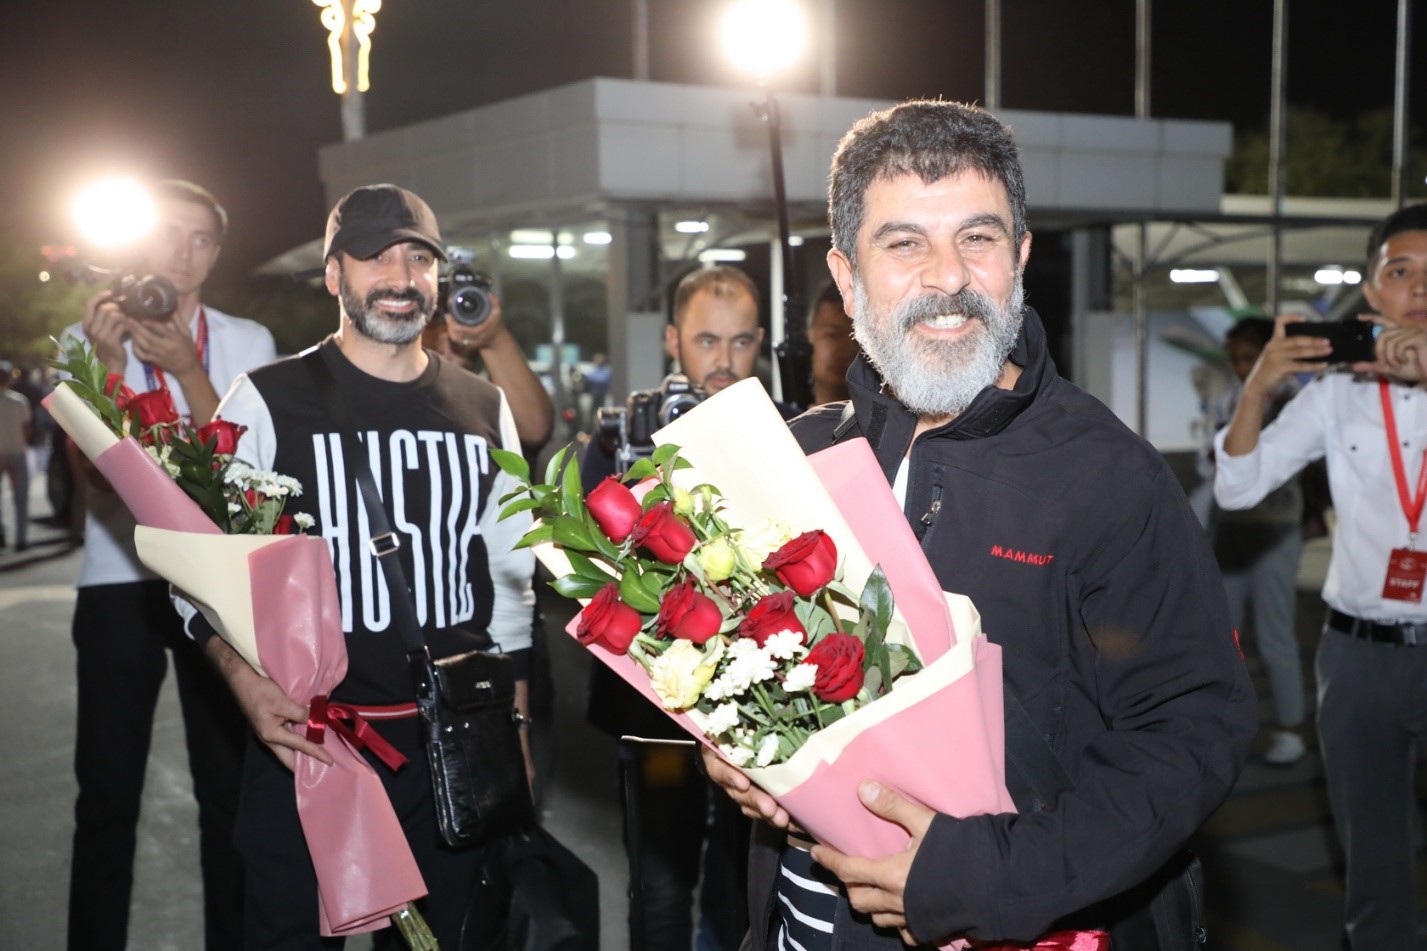 Guests were greeted at the Islam Karimov Tashkent International Airport